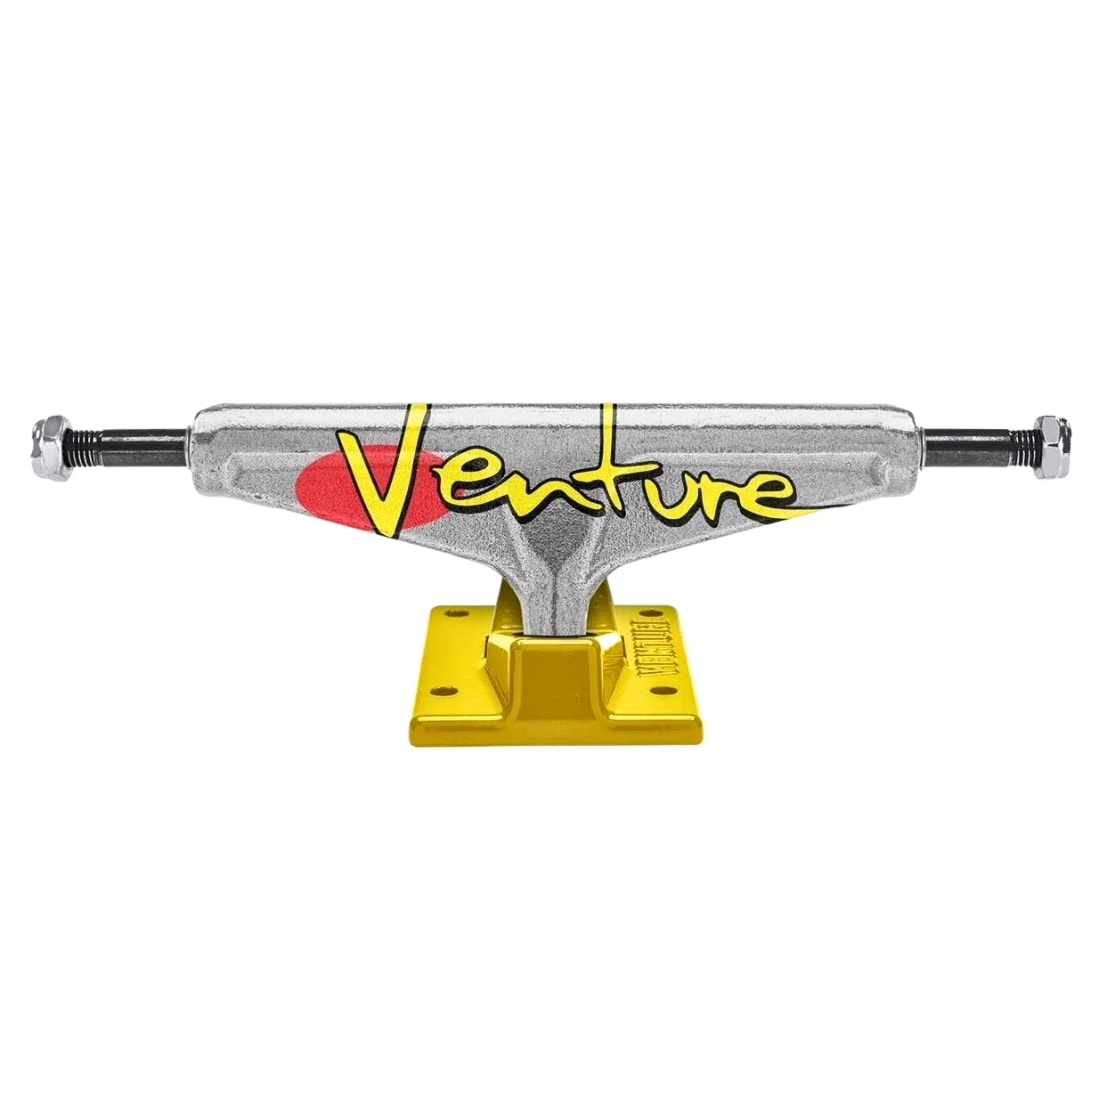 Venture 5.0 Full Bleed Team Trucks (Pair) - Polished Yellow - Skateboard Trucks by Venture 5.0 inch